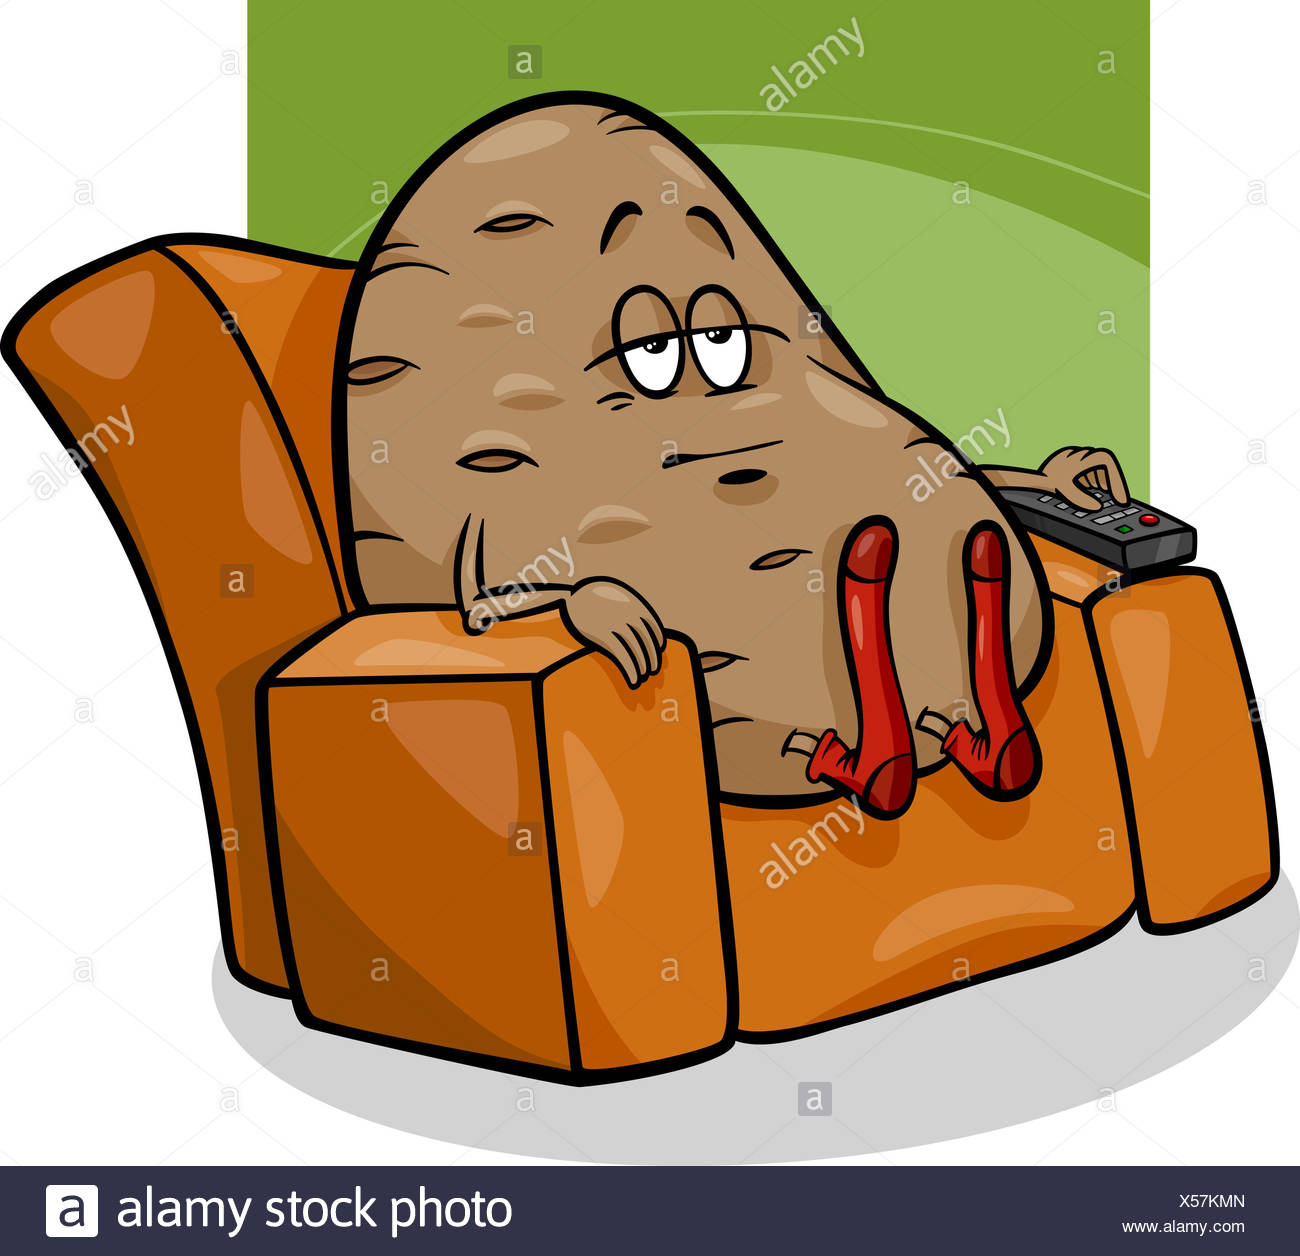 Illustration Animated Couch Potato Illustration Of Many